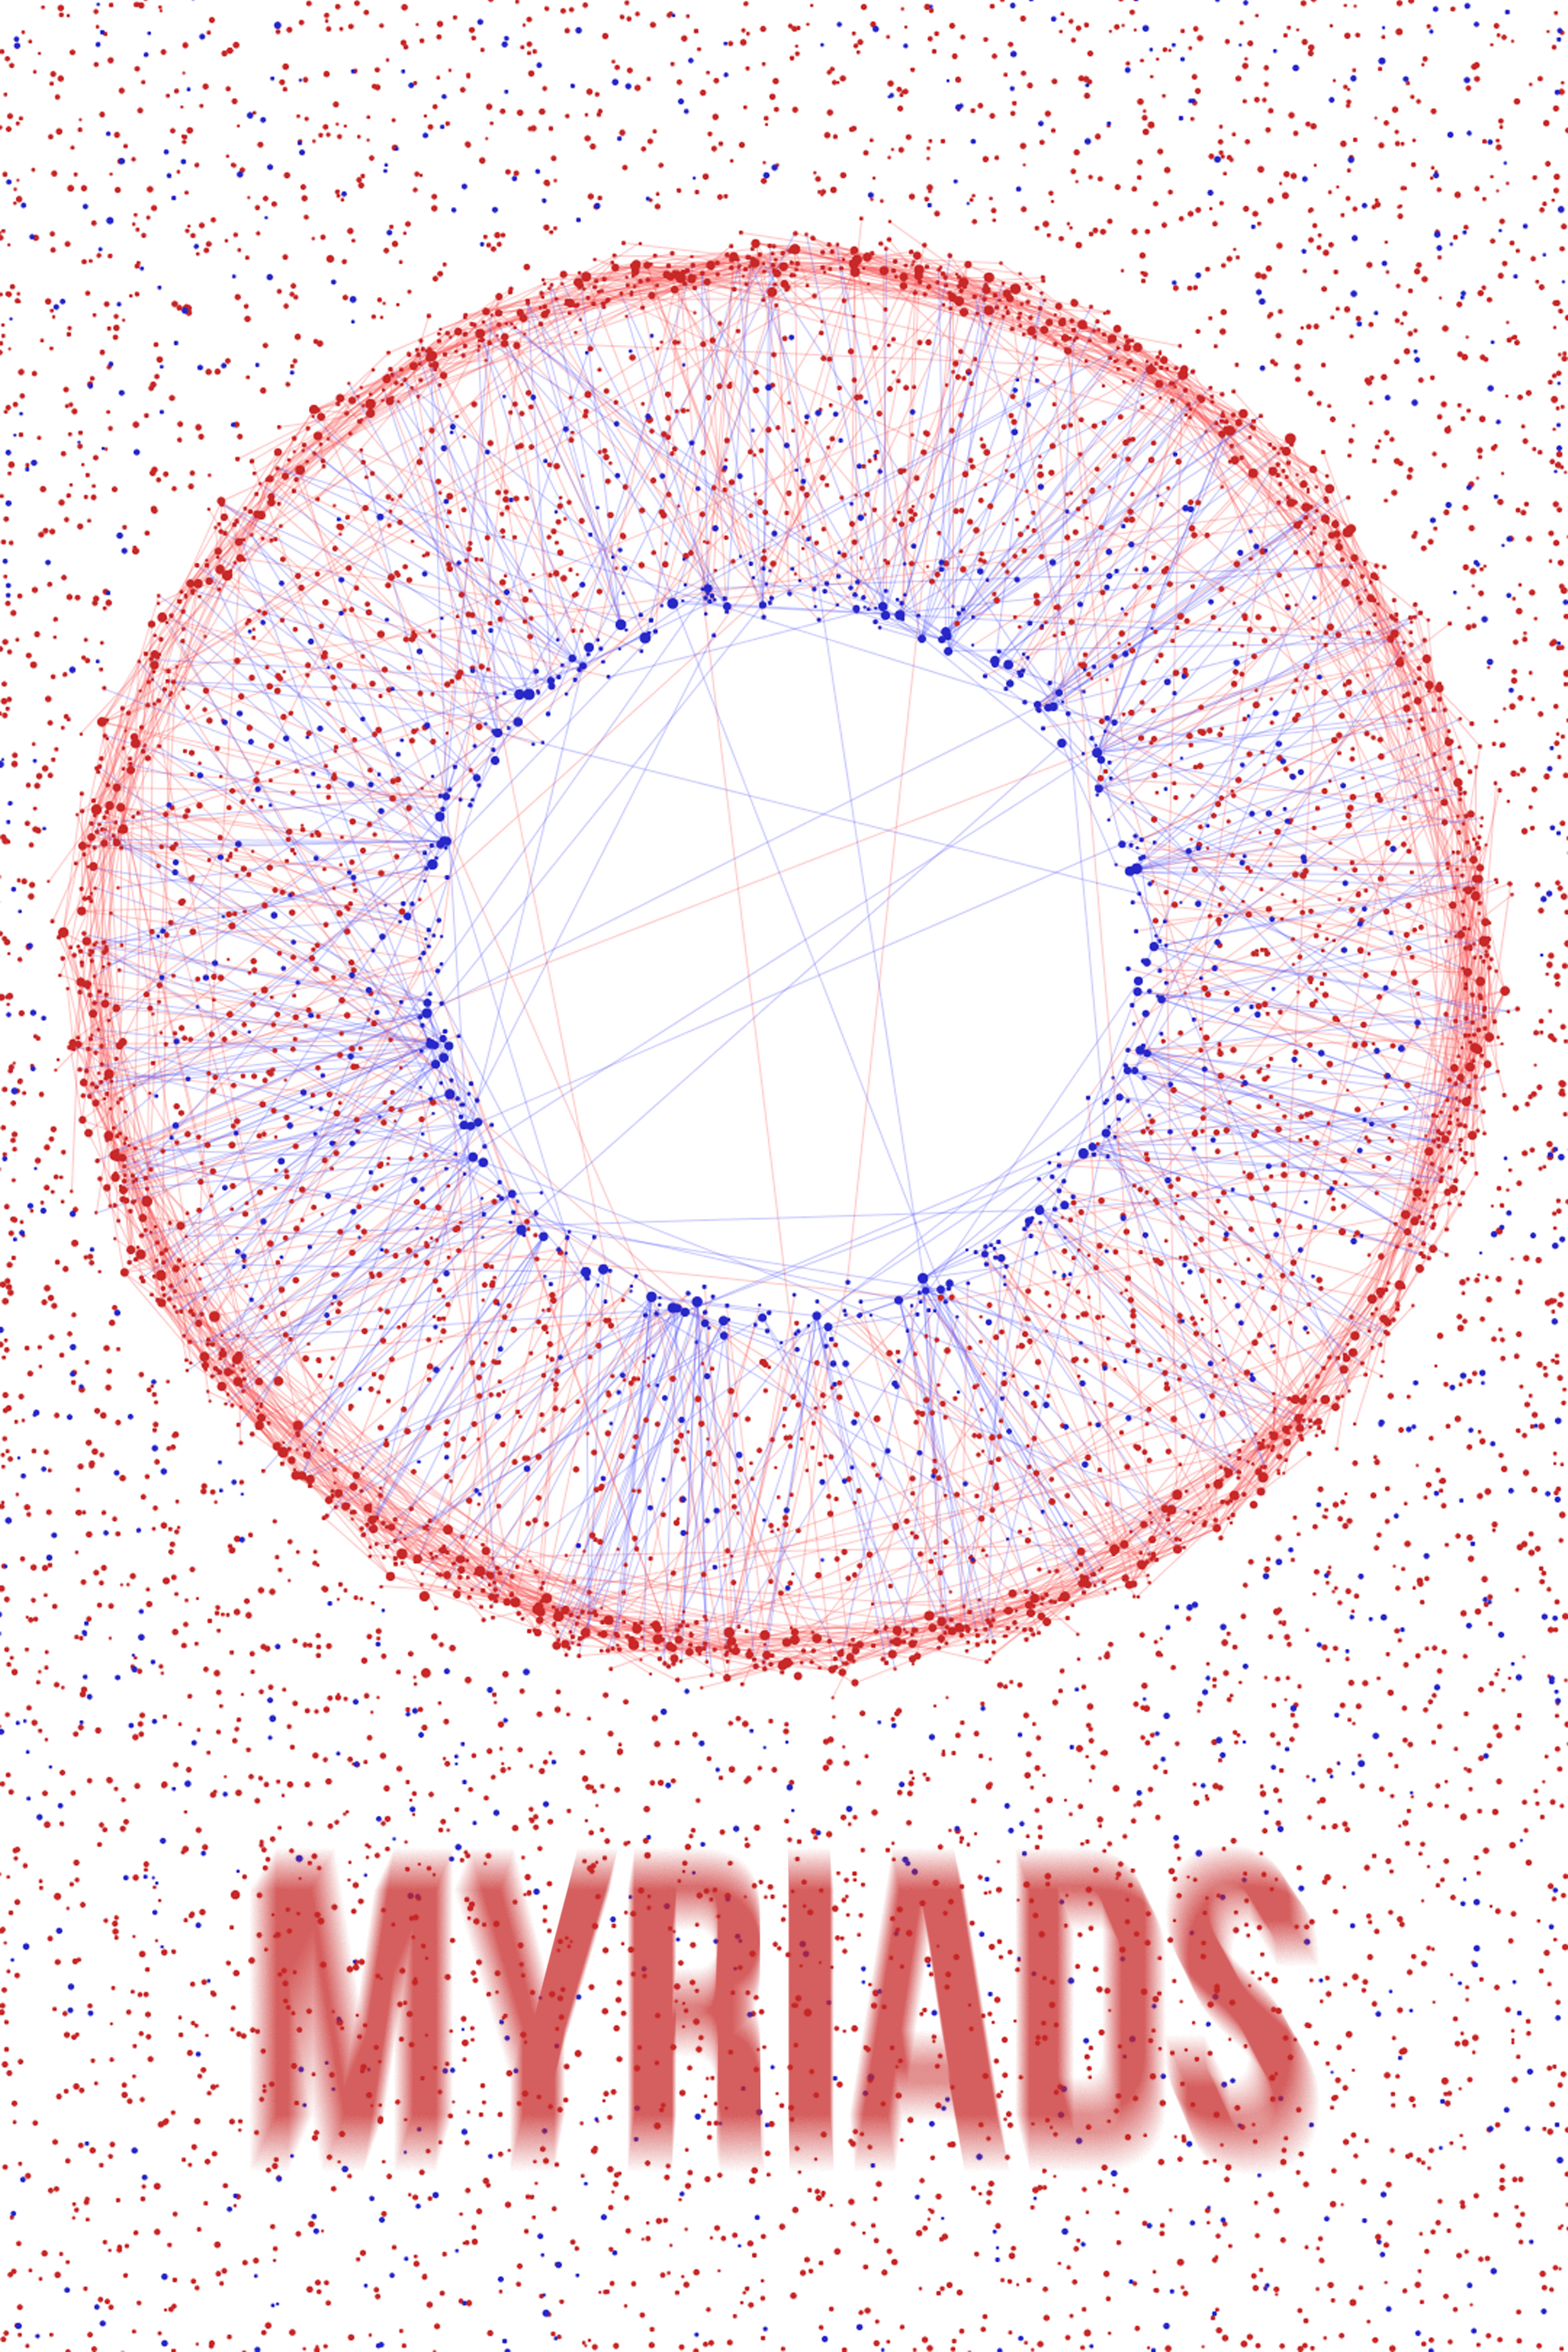 Myriads, visualization